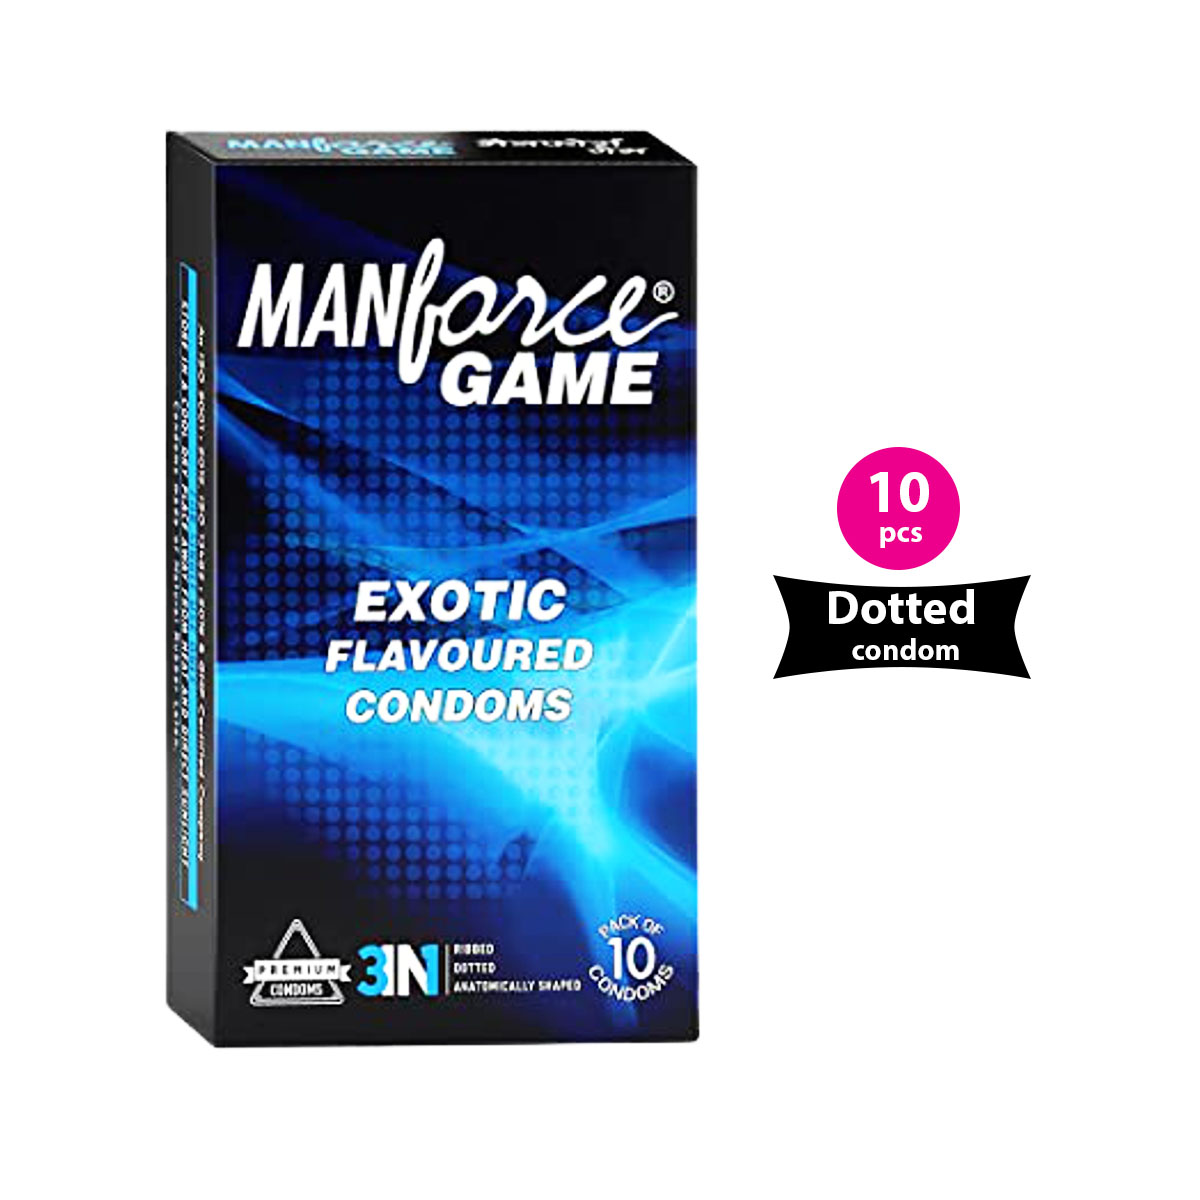 Manforce Game Exotic Flavored Condom Pcs Beauty Mind Ll Beauty